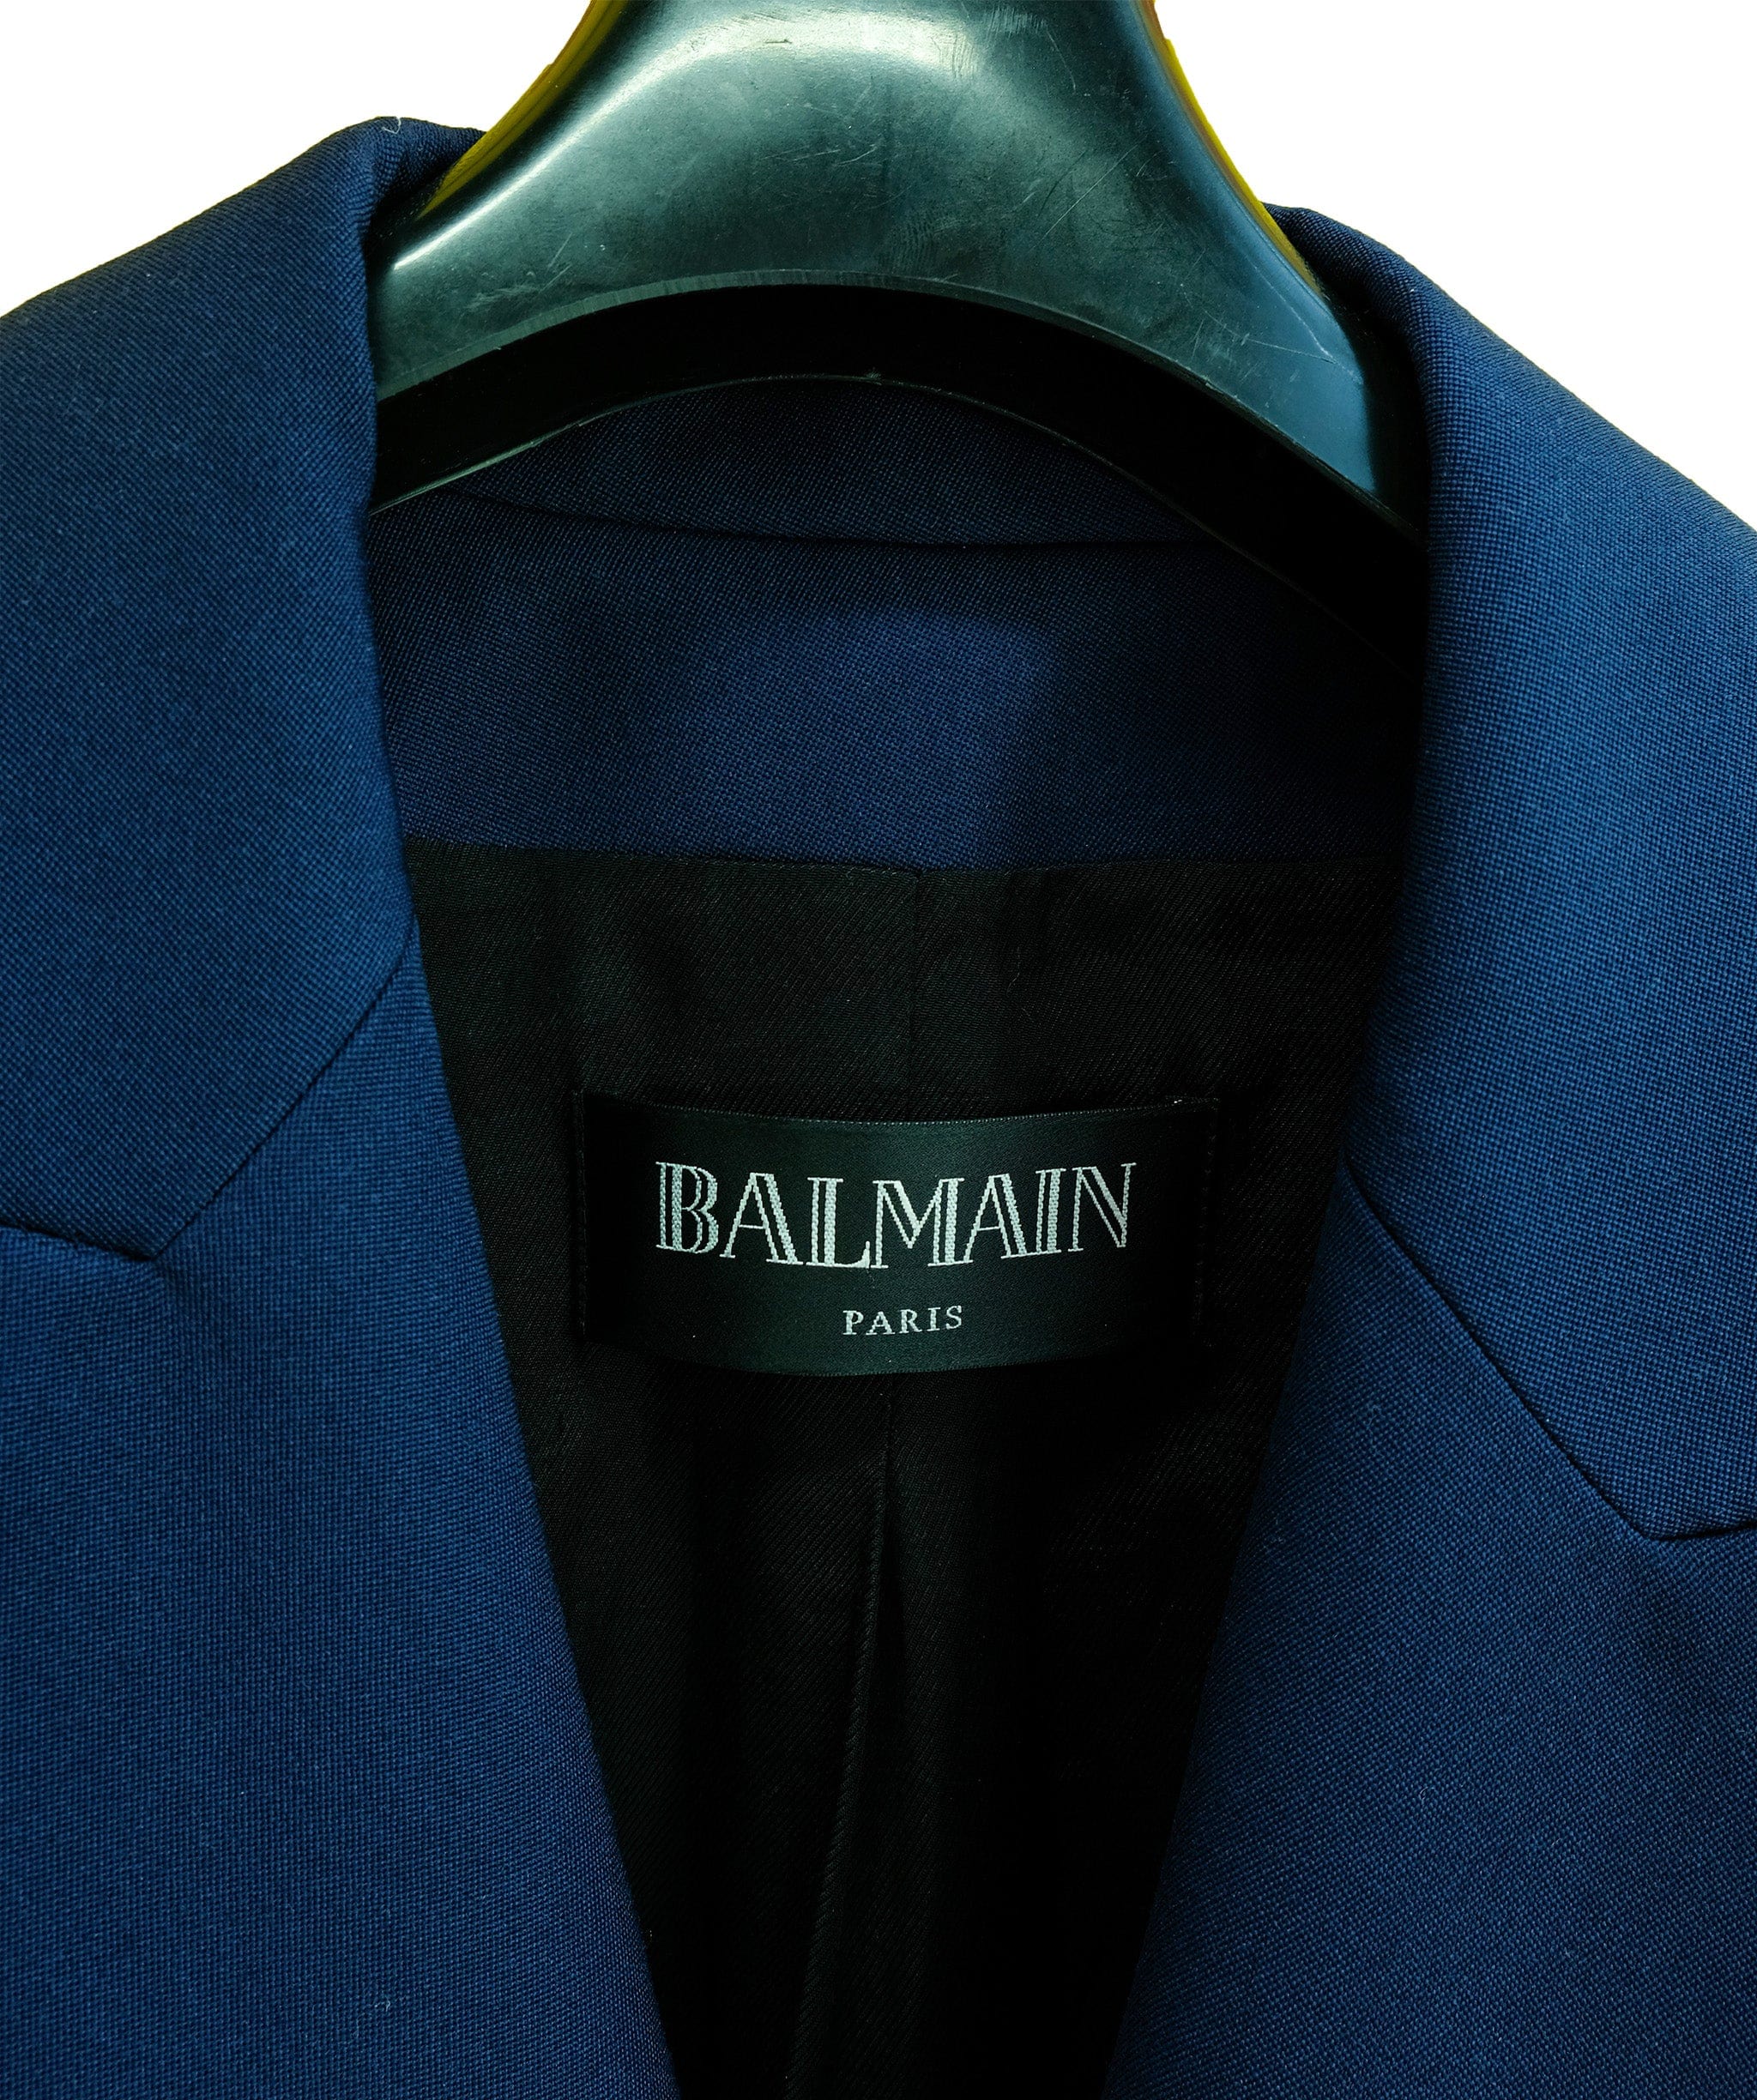 Balmain Balmain Blue Blazer 44EU RJC1419